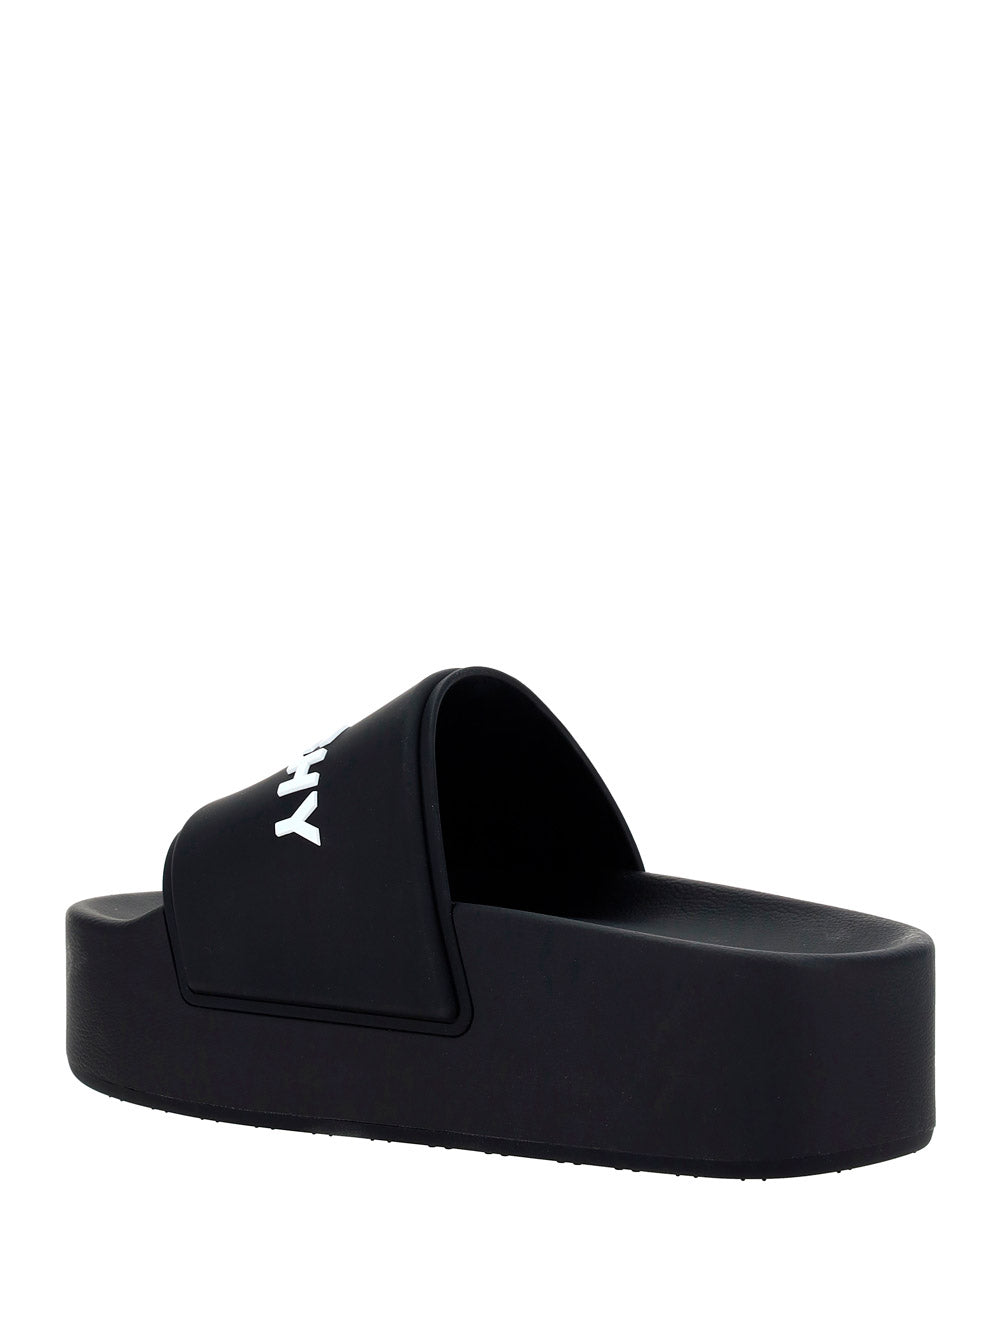 Platform Paris Sandals in Rubber - Black